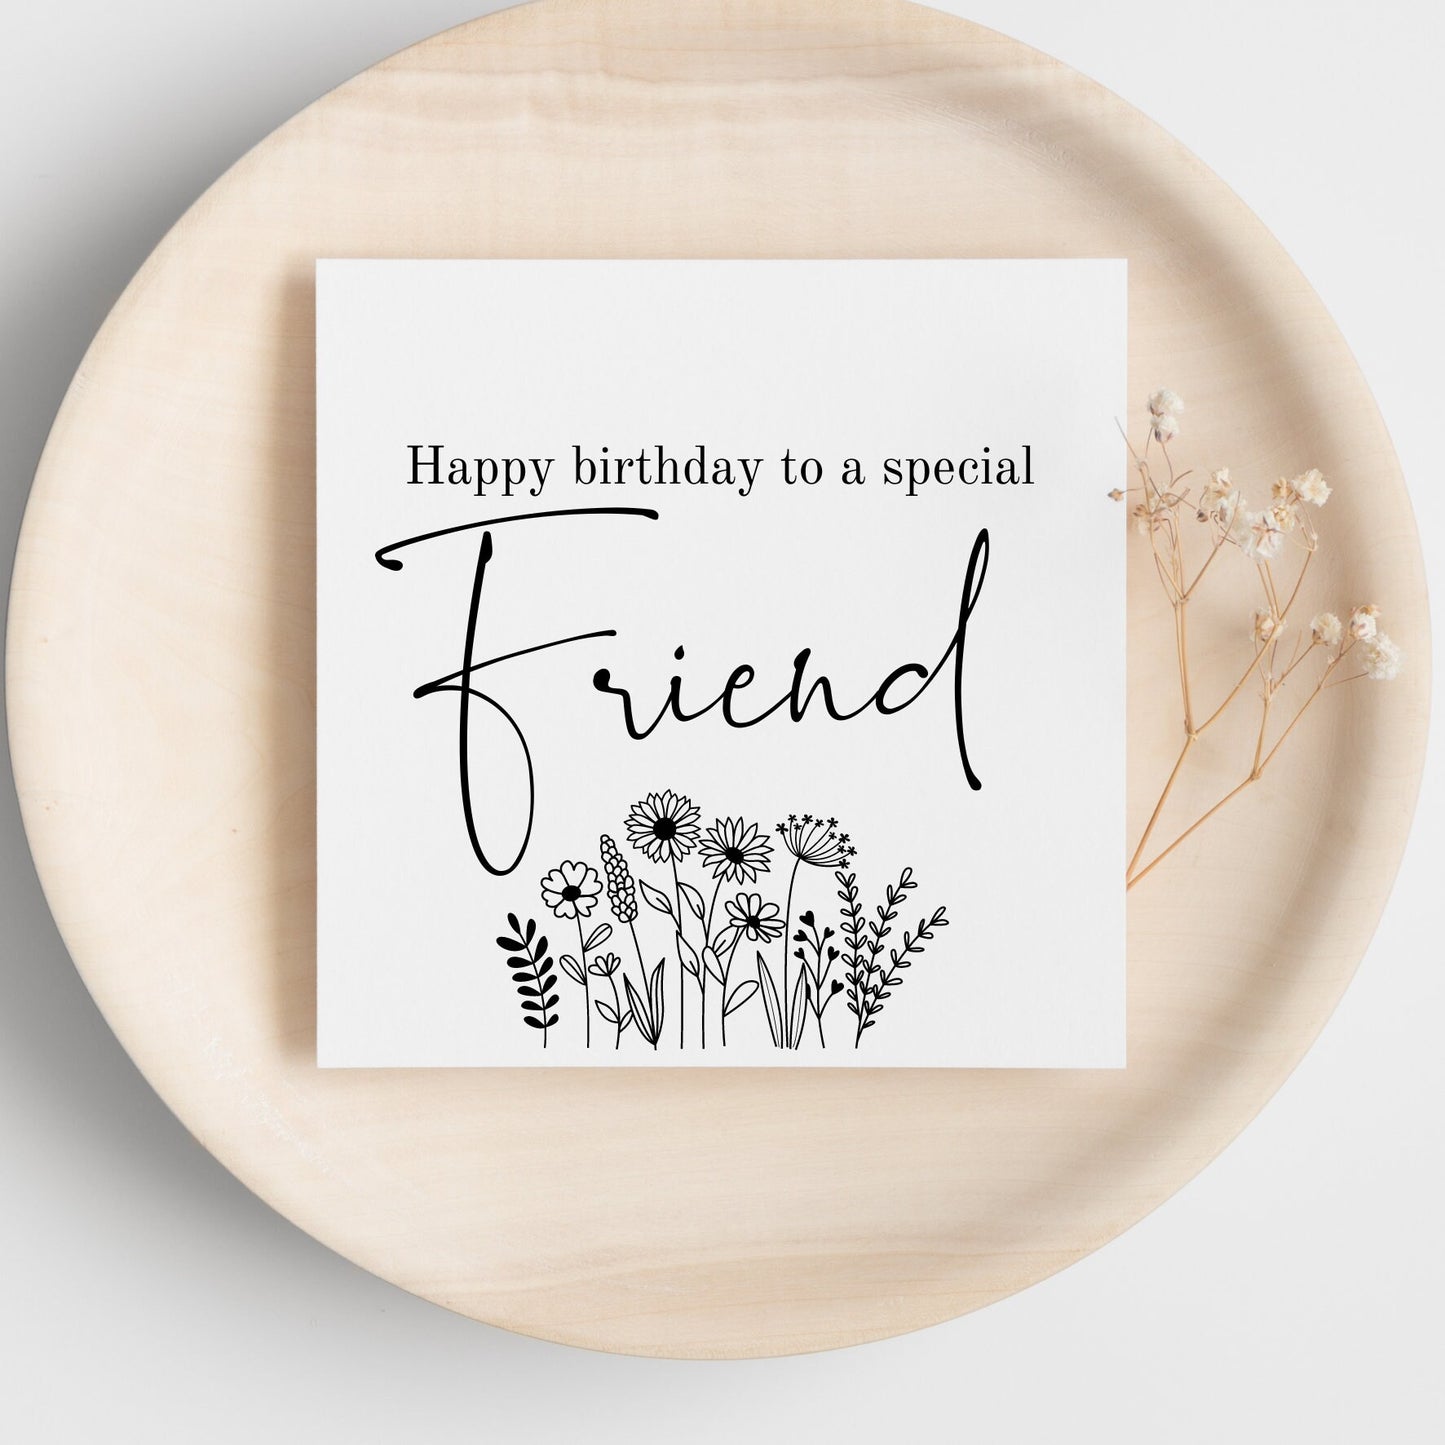 Friend birthday card, happy birthday to a special friend, bestie bday card, work wife birthday, floral monochrome greeting card